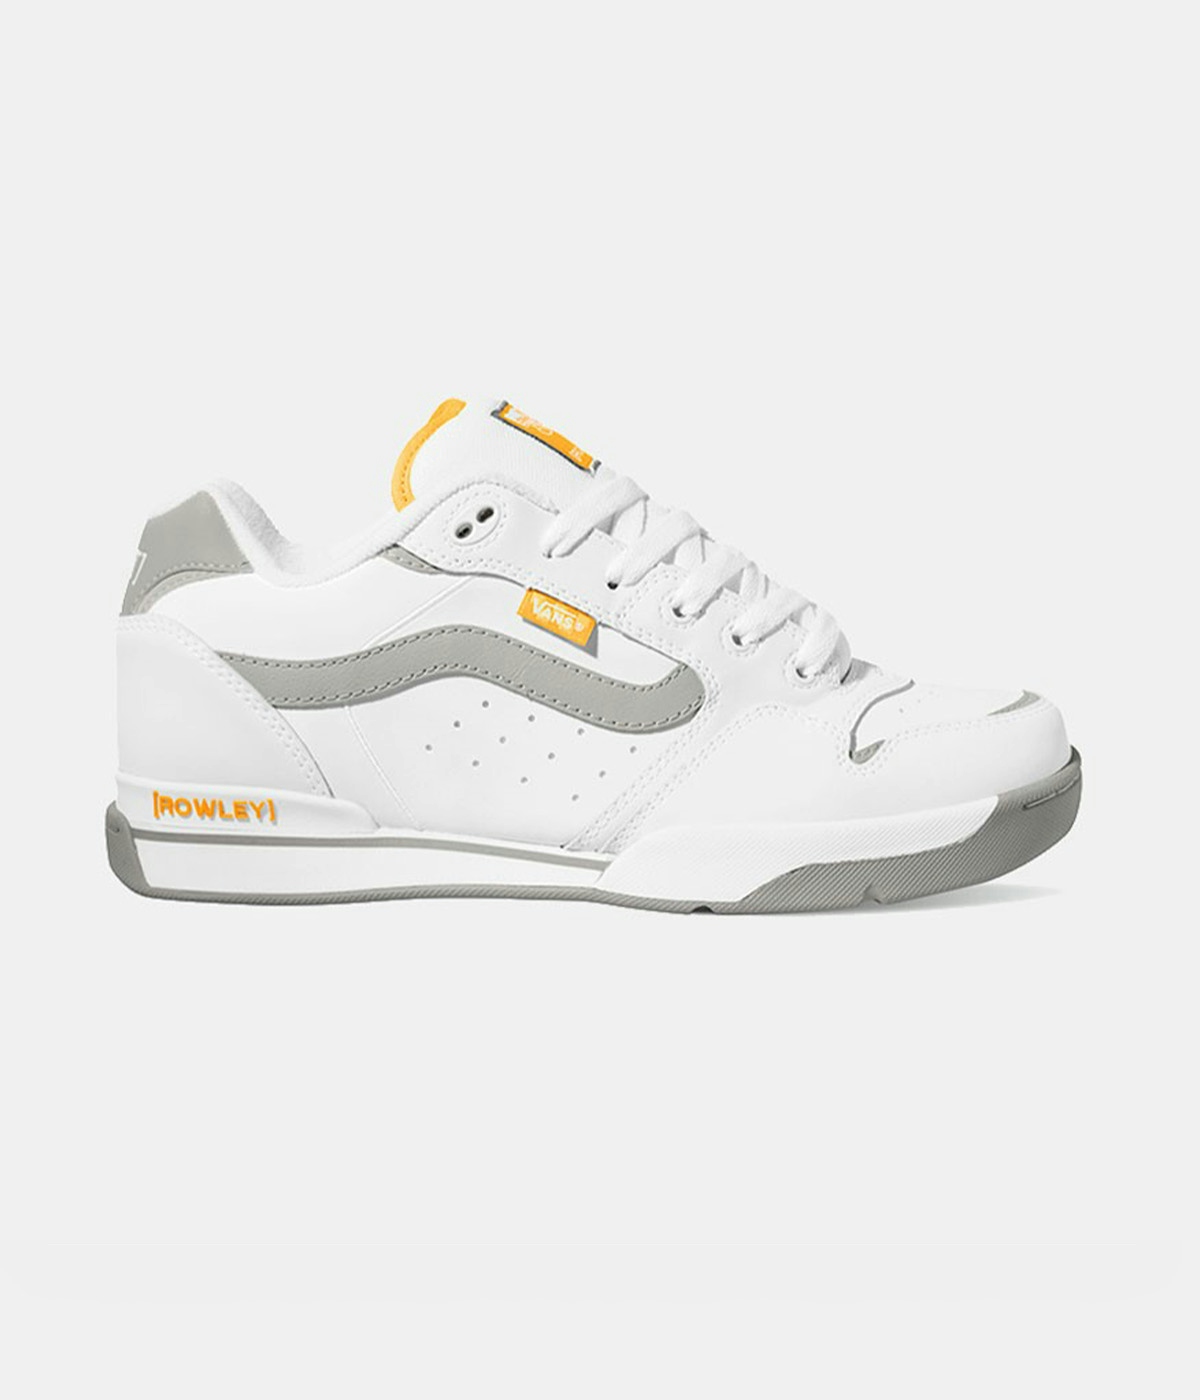 Vans Shoes Rowley XLT White/Grey 1